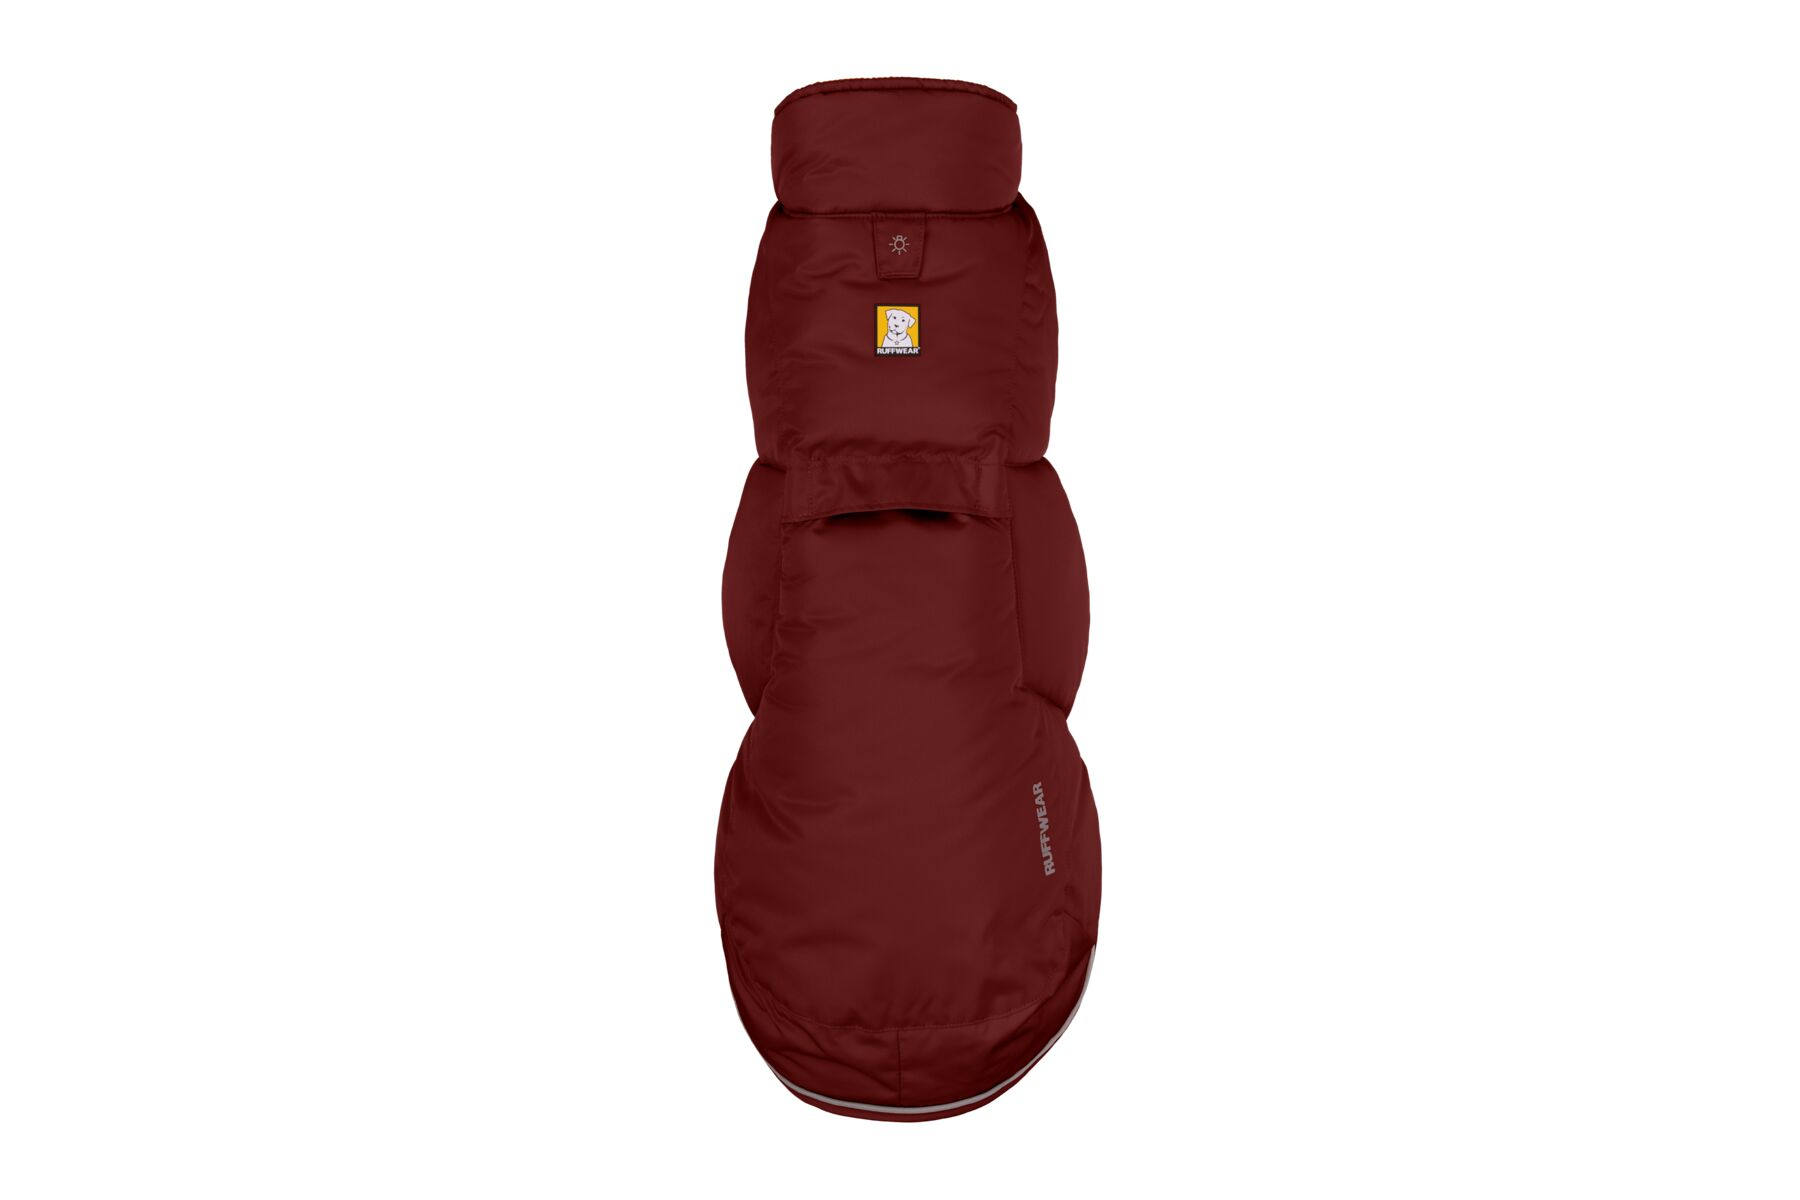 Abrigo aislante Quinzee Rojo de Ruffwear - varias tallas disponibles